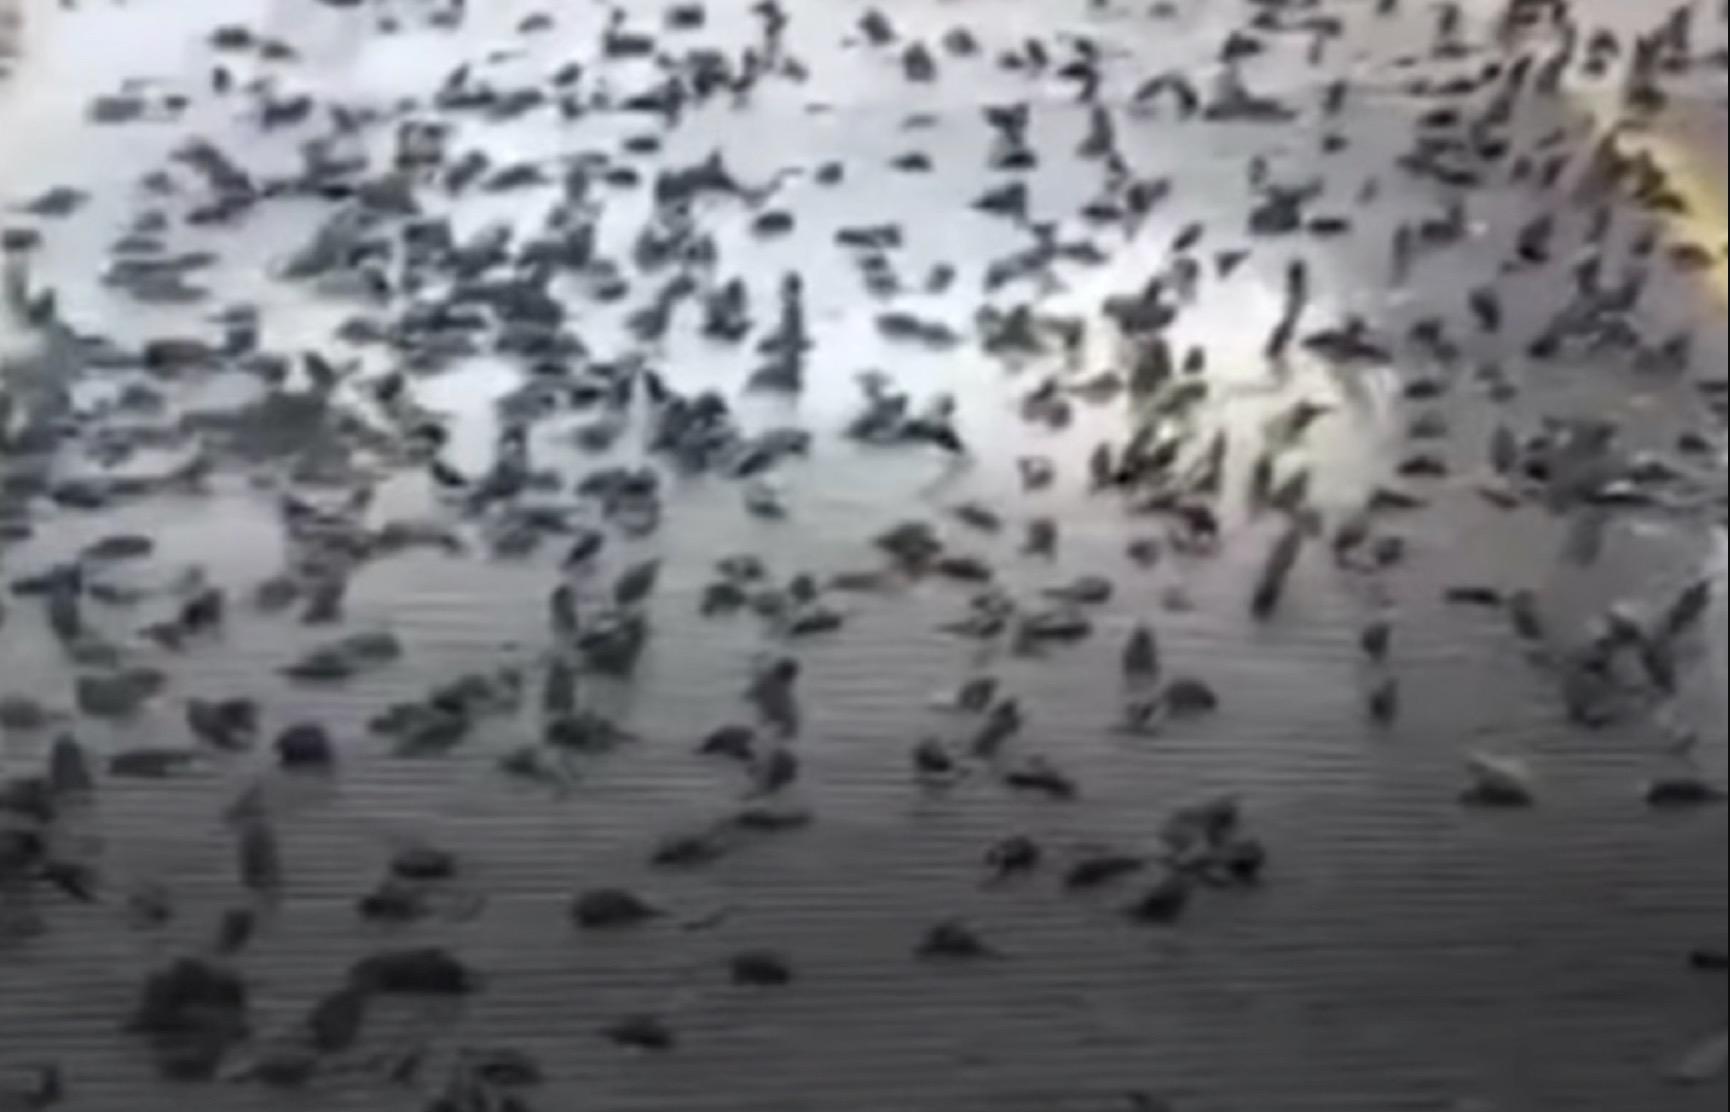 Penduduk Gusar Ratusan Burung Pipit Mati Secara Tiba-tiba Selepas Jatuh Dari Pokok - nangtime.com